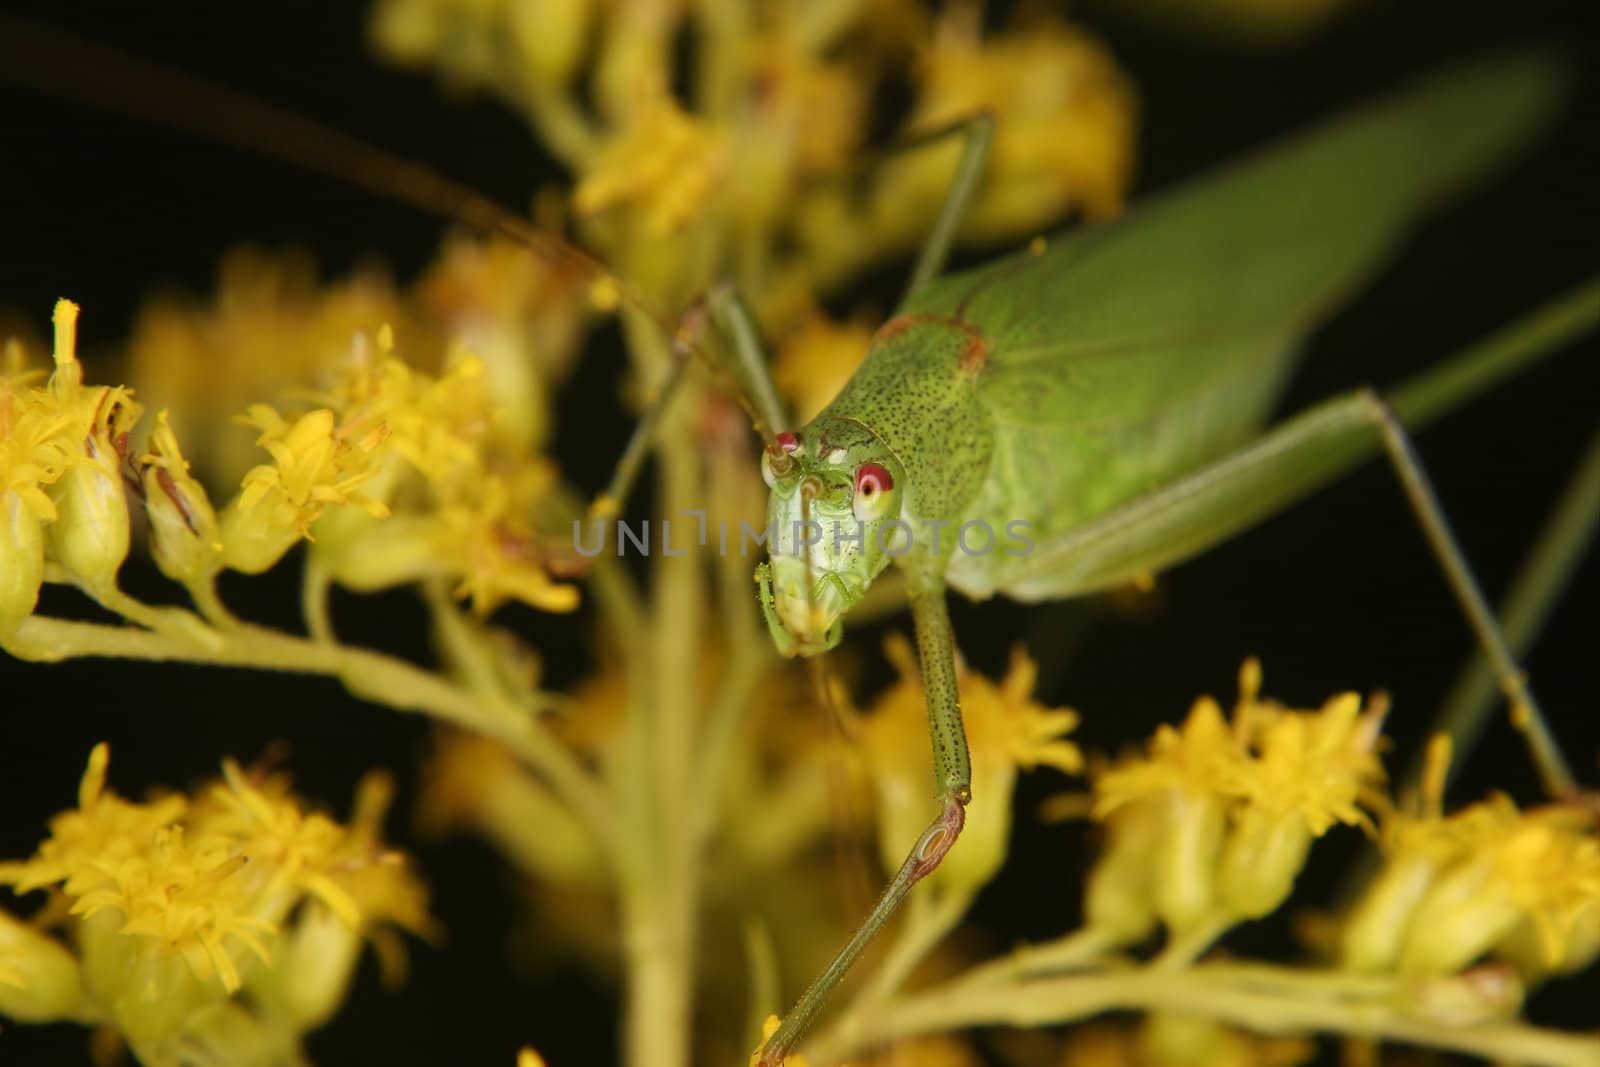 Bush cricket (Phaneroptera falcata) by tdietrich